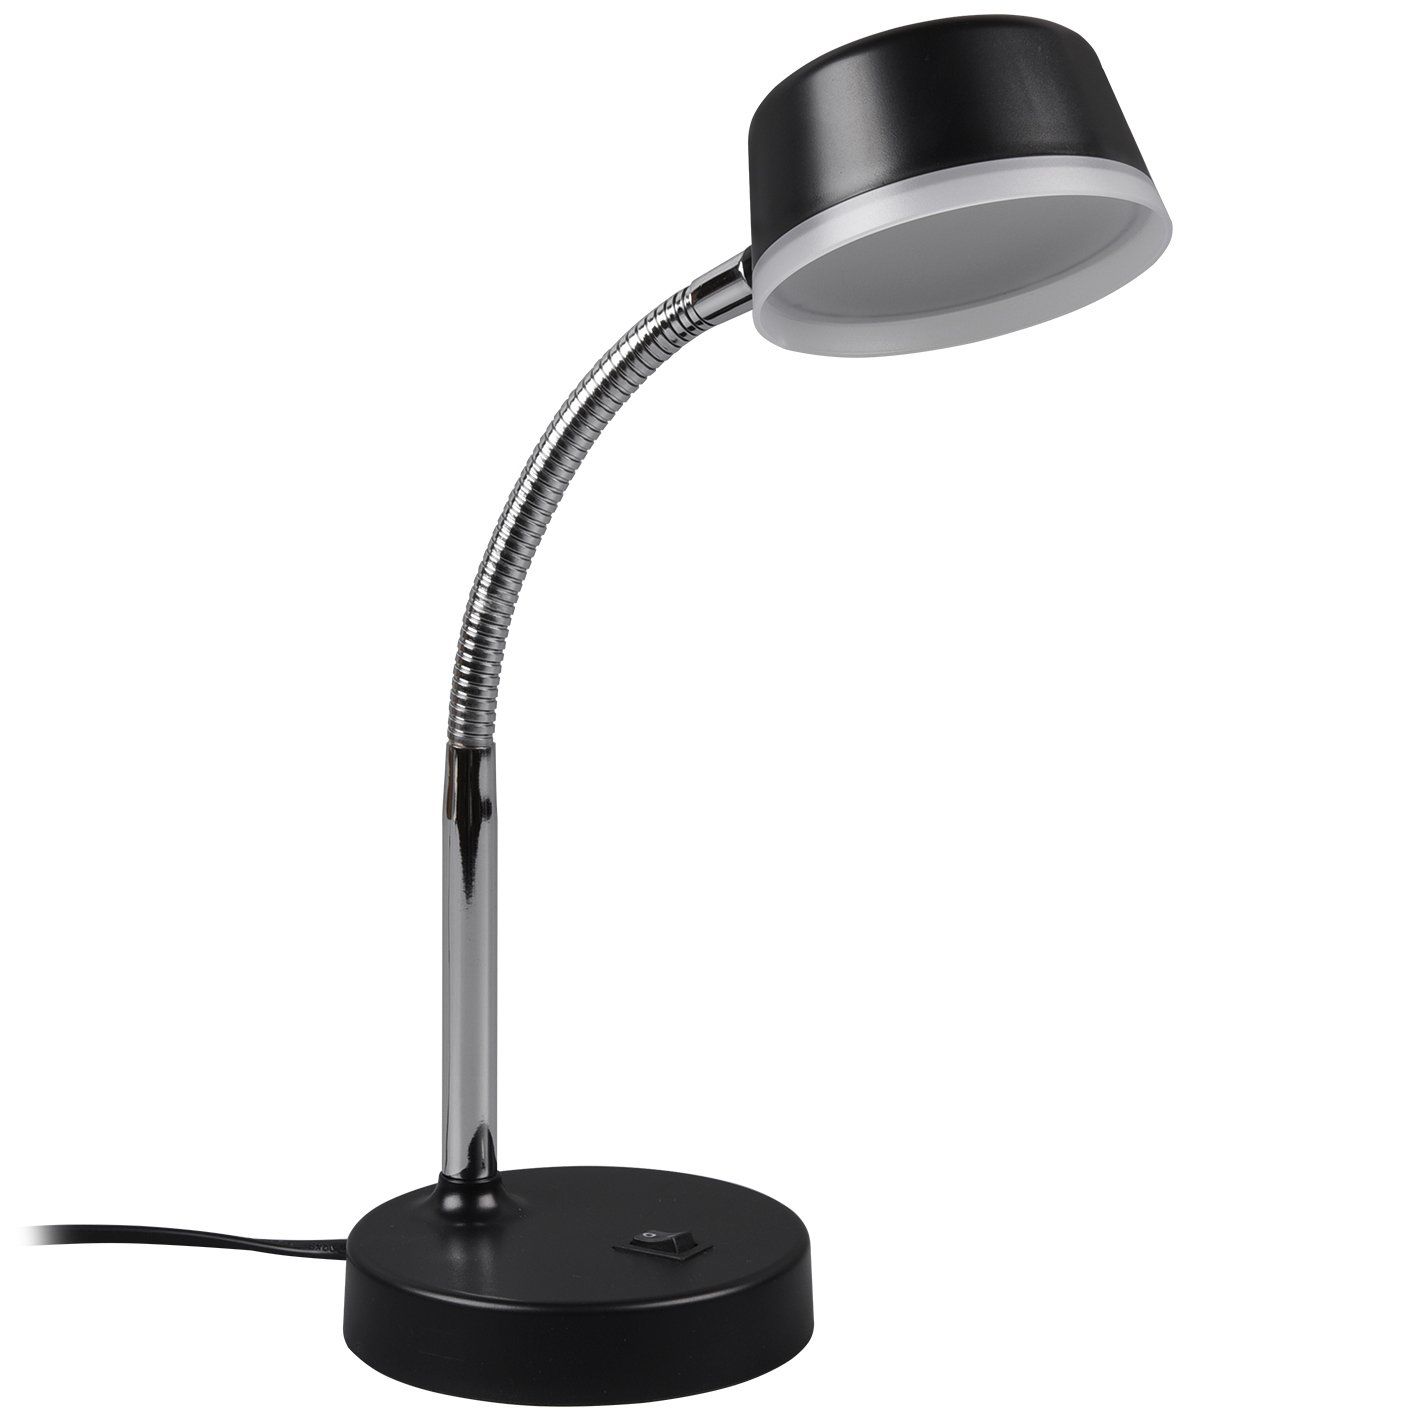 Lampe de bureau LED KIKO en PVC noir